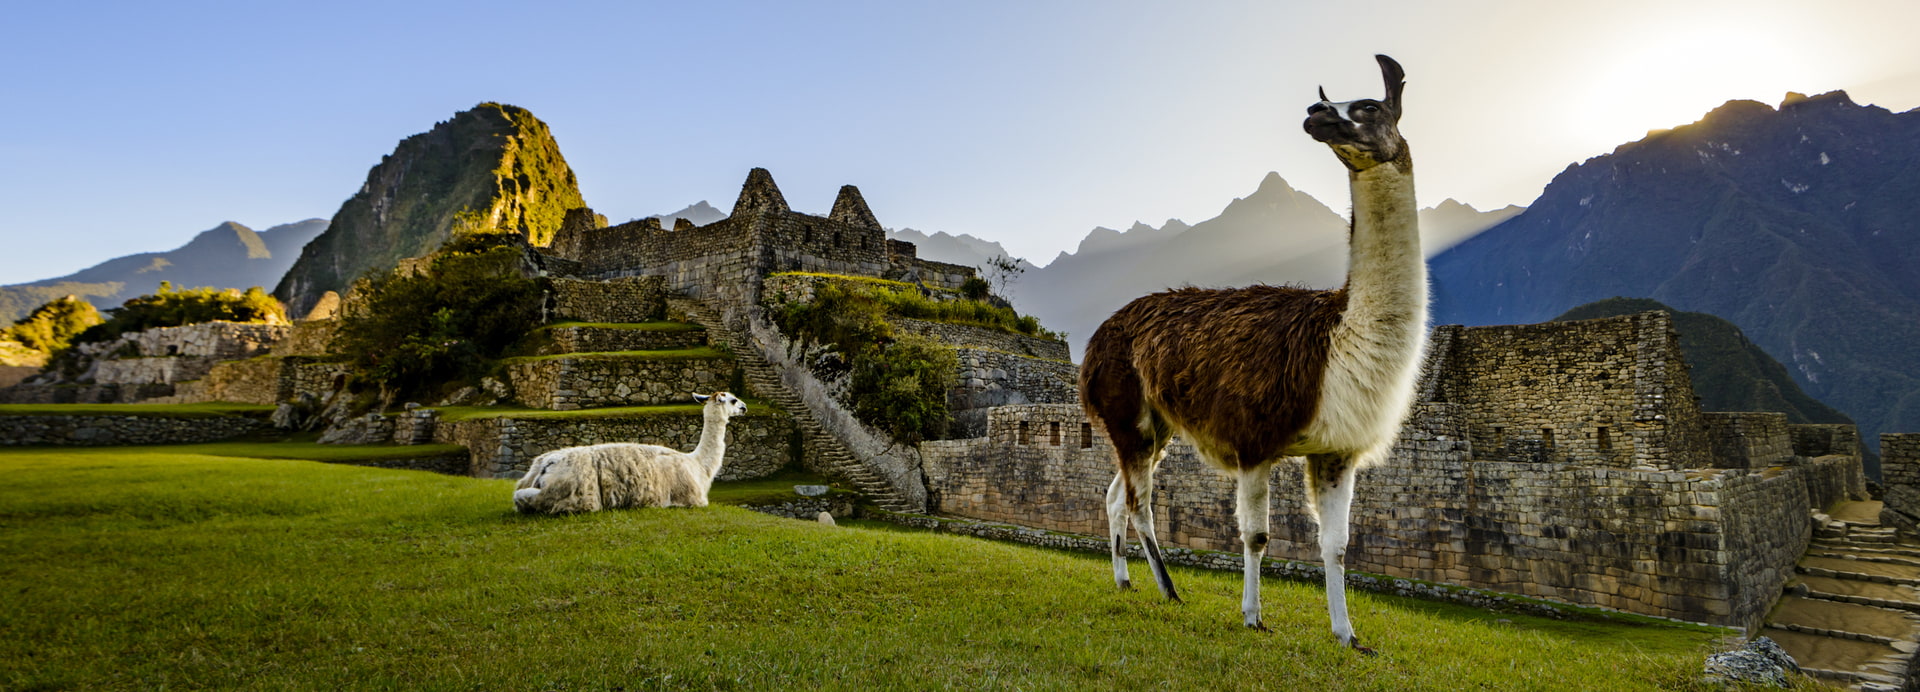 Machu Picchu Llama - Salkantay trek de lujo a Machu Picchu